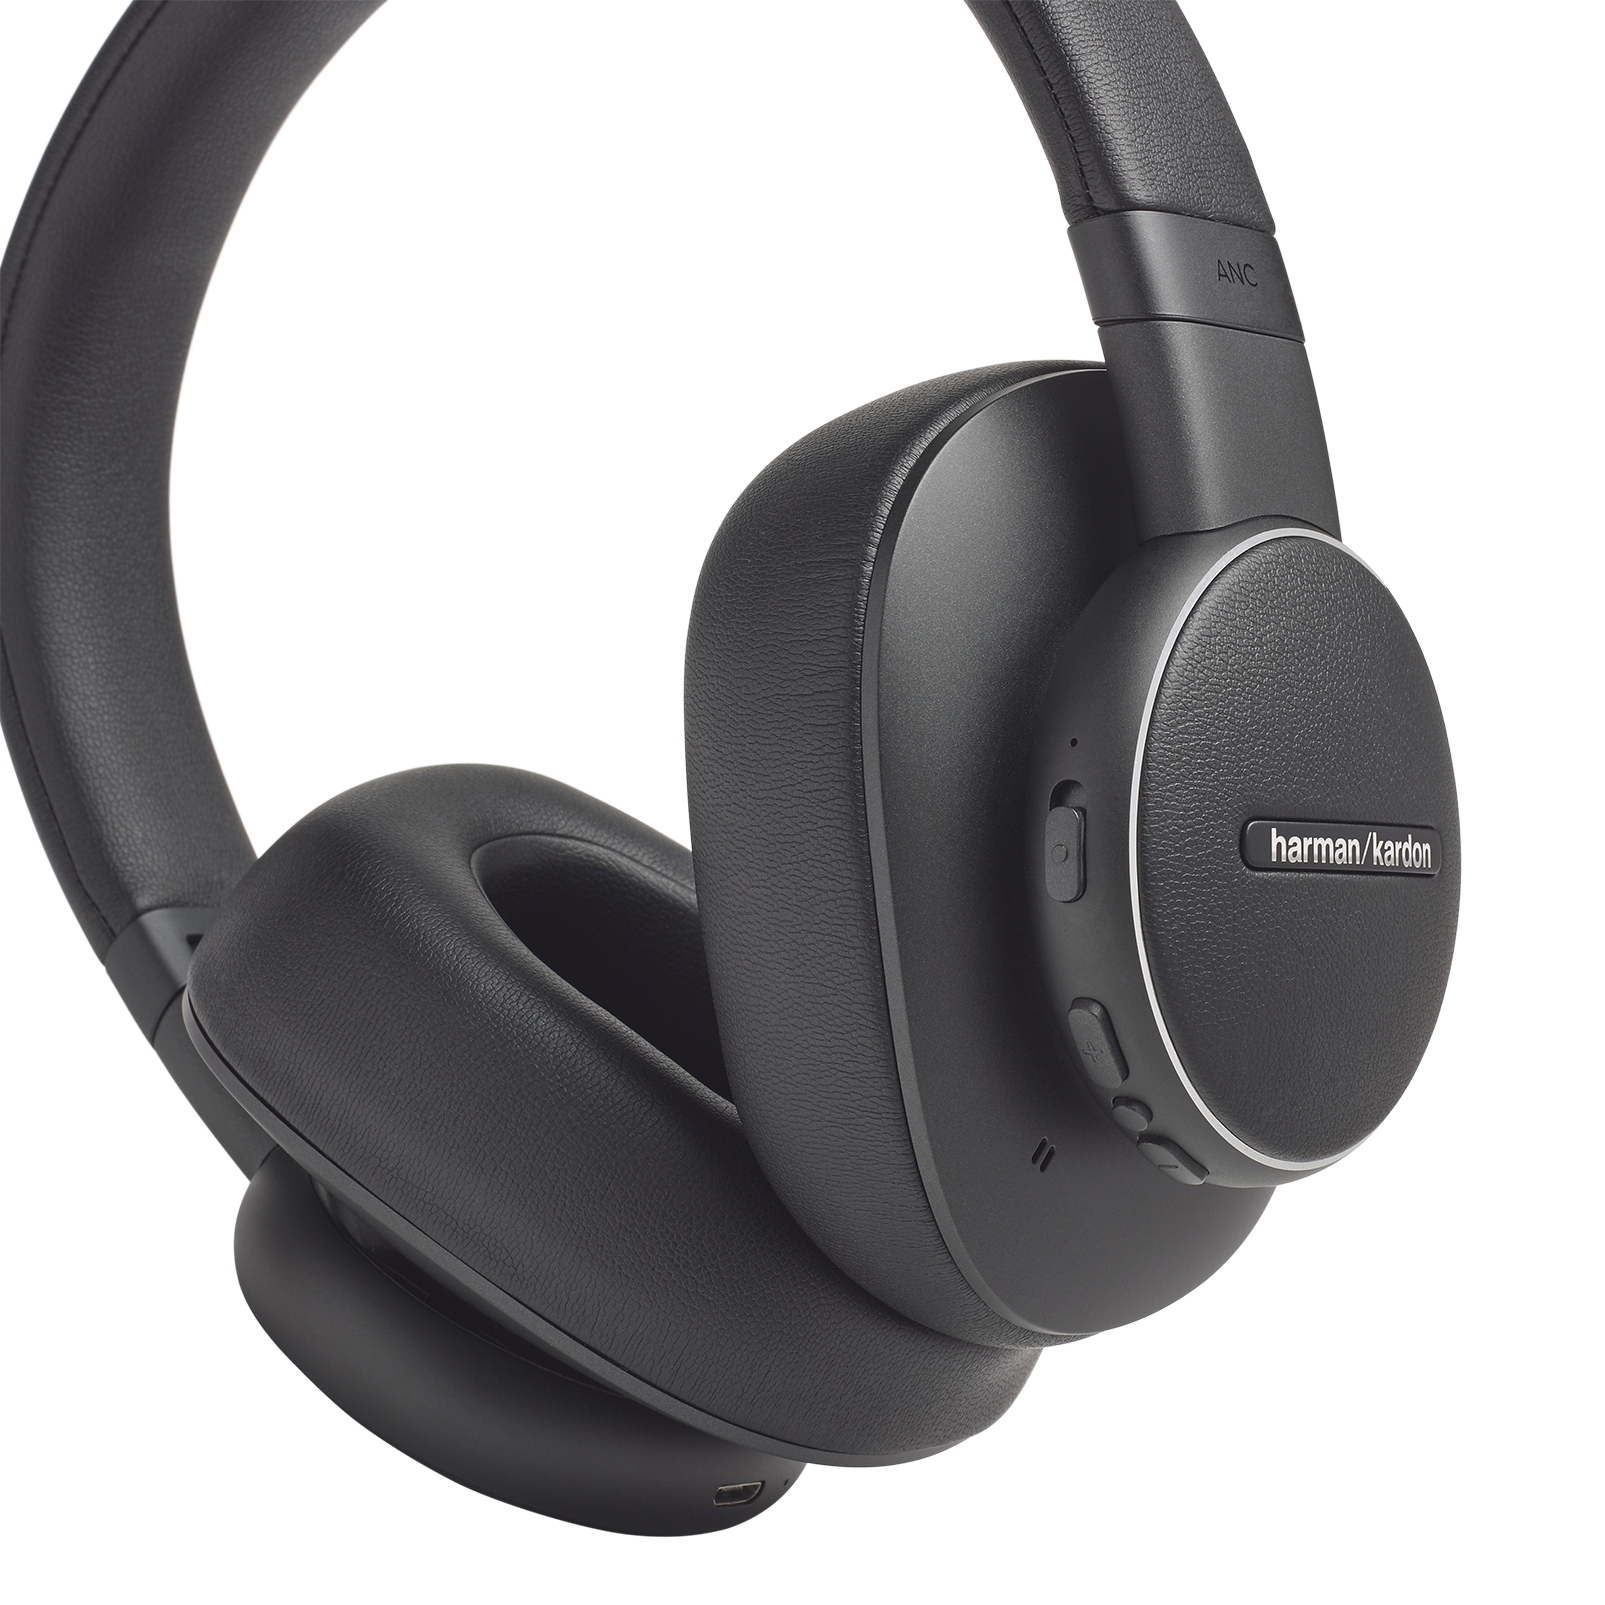 Harman Kardon FLY ANC - Black - Wireless Over-Ear NC Headphones - Detailshot 2